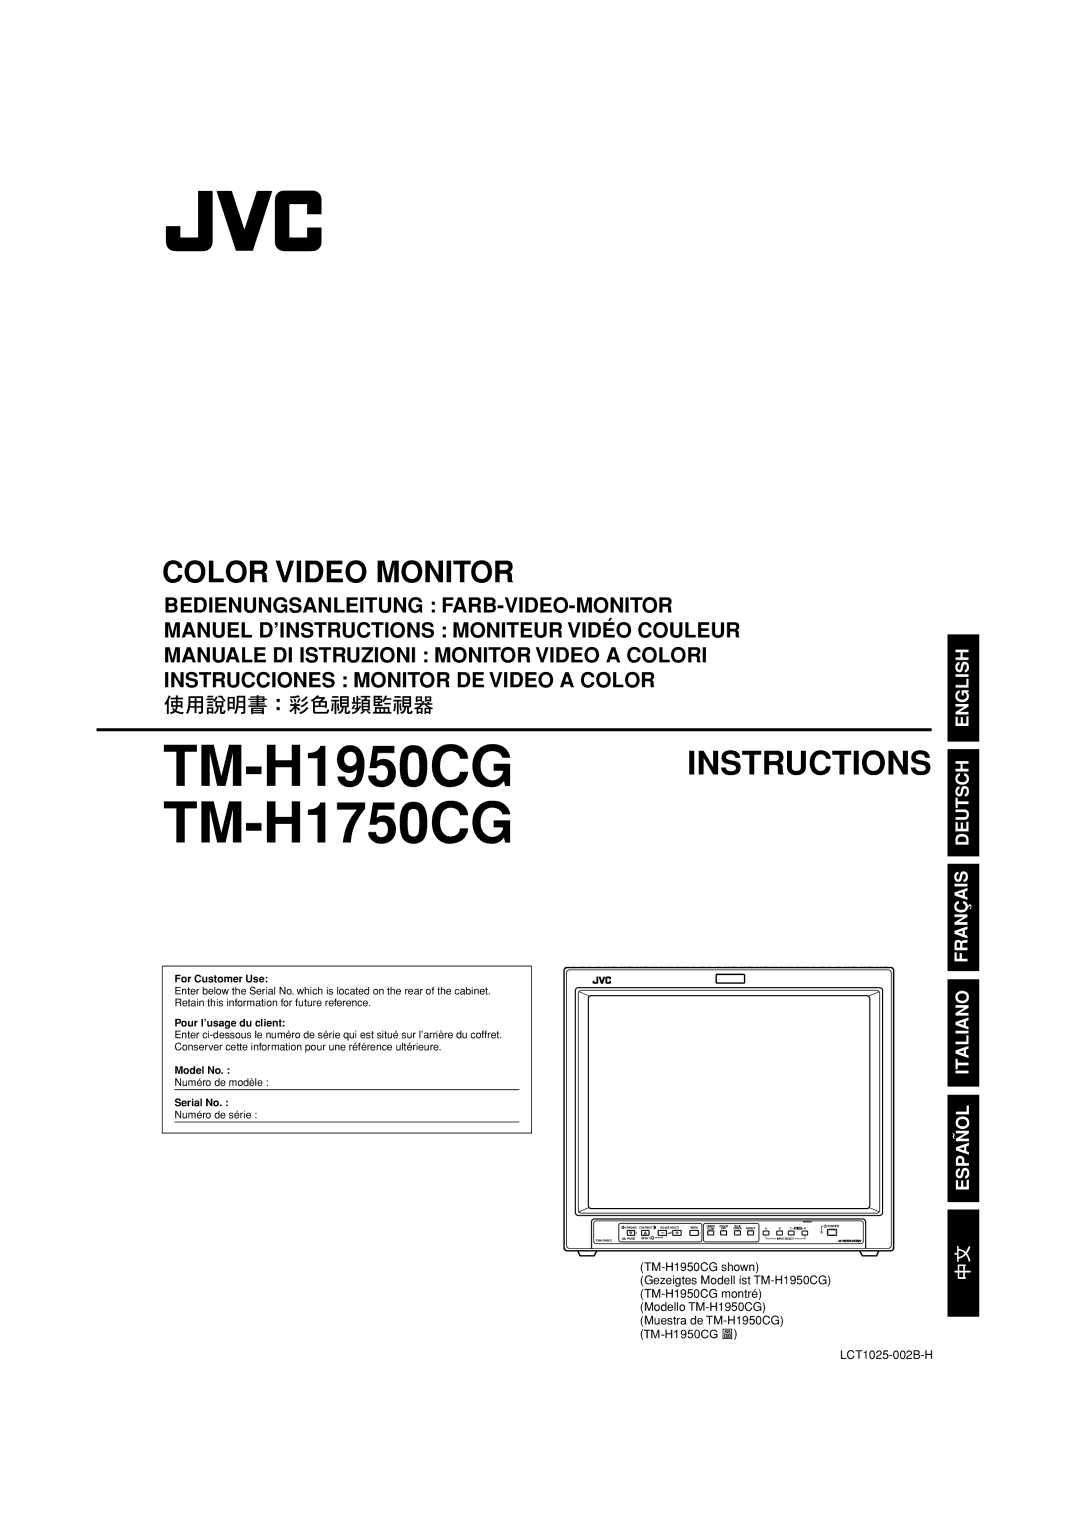 JVC TM-H1950CG manual TM-H1750CG, Color Video Monitor 